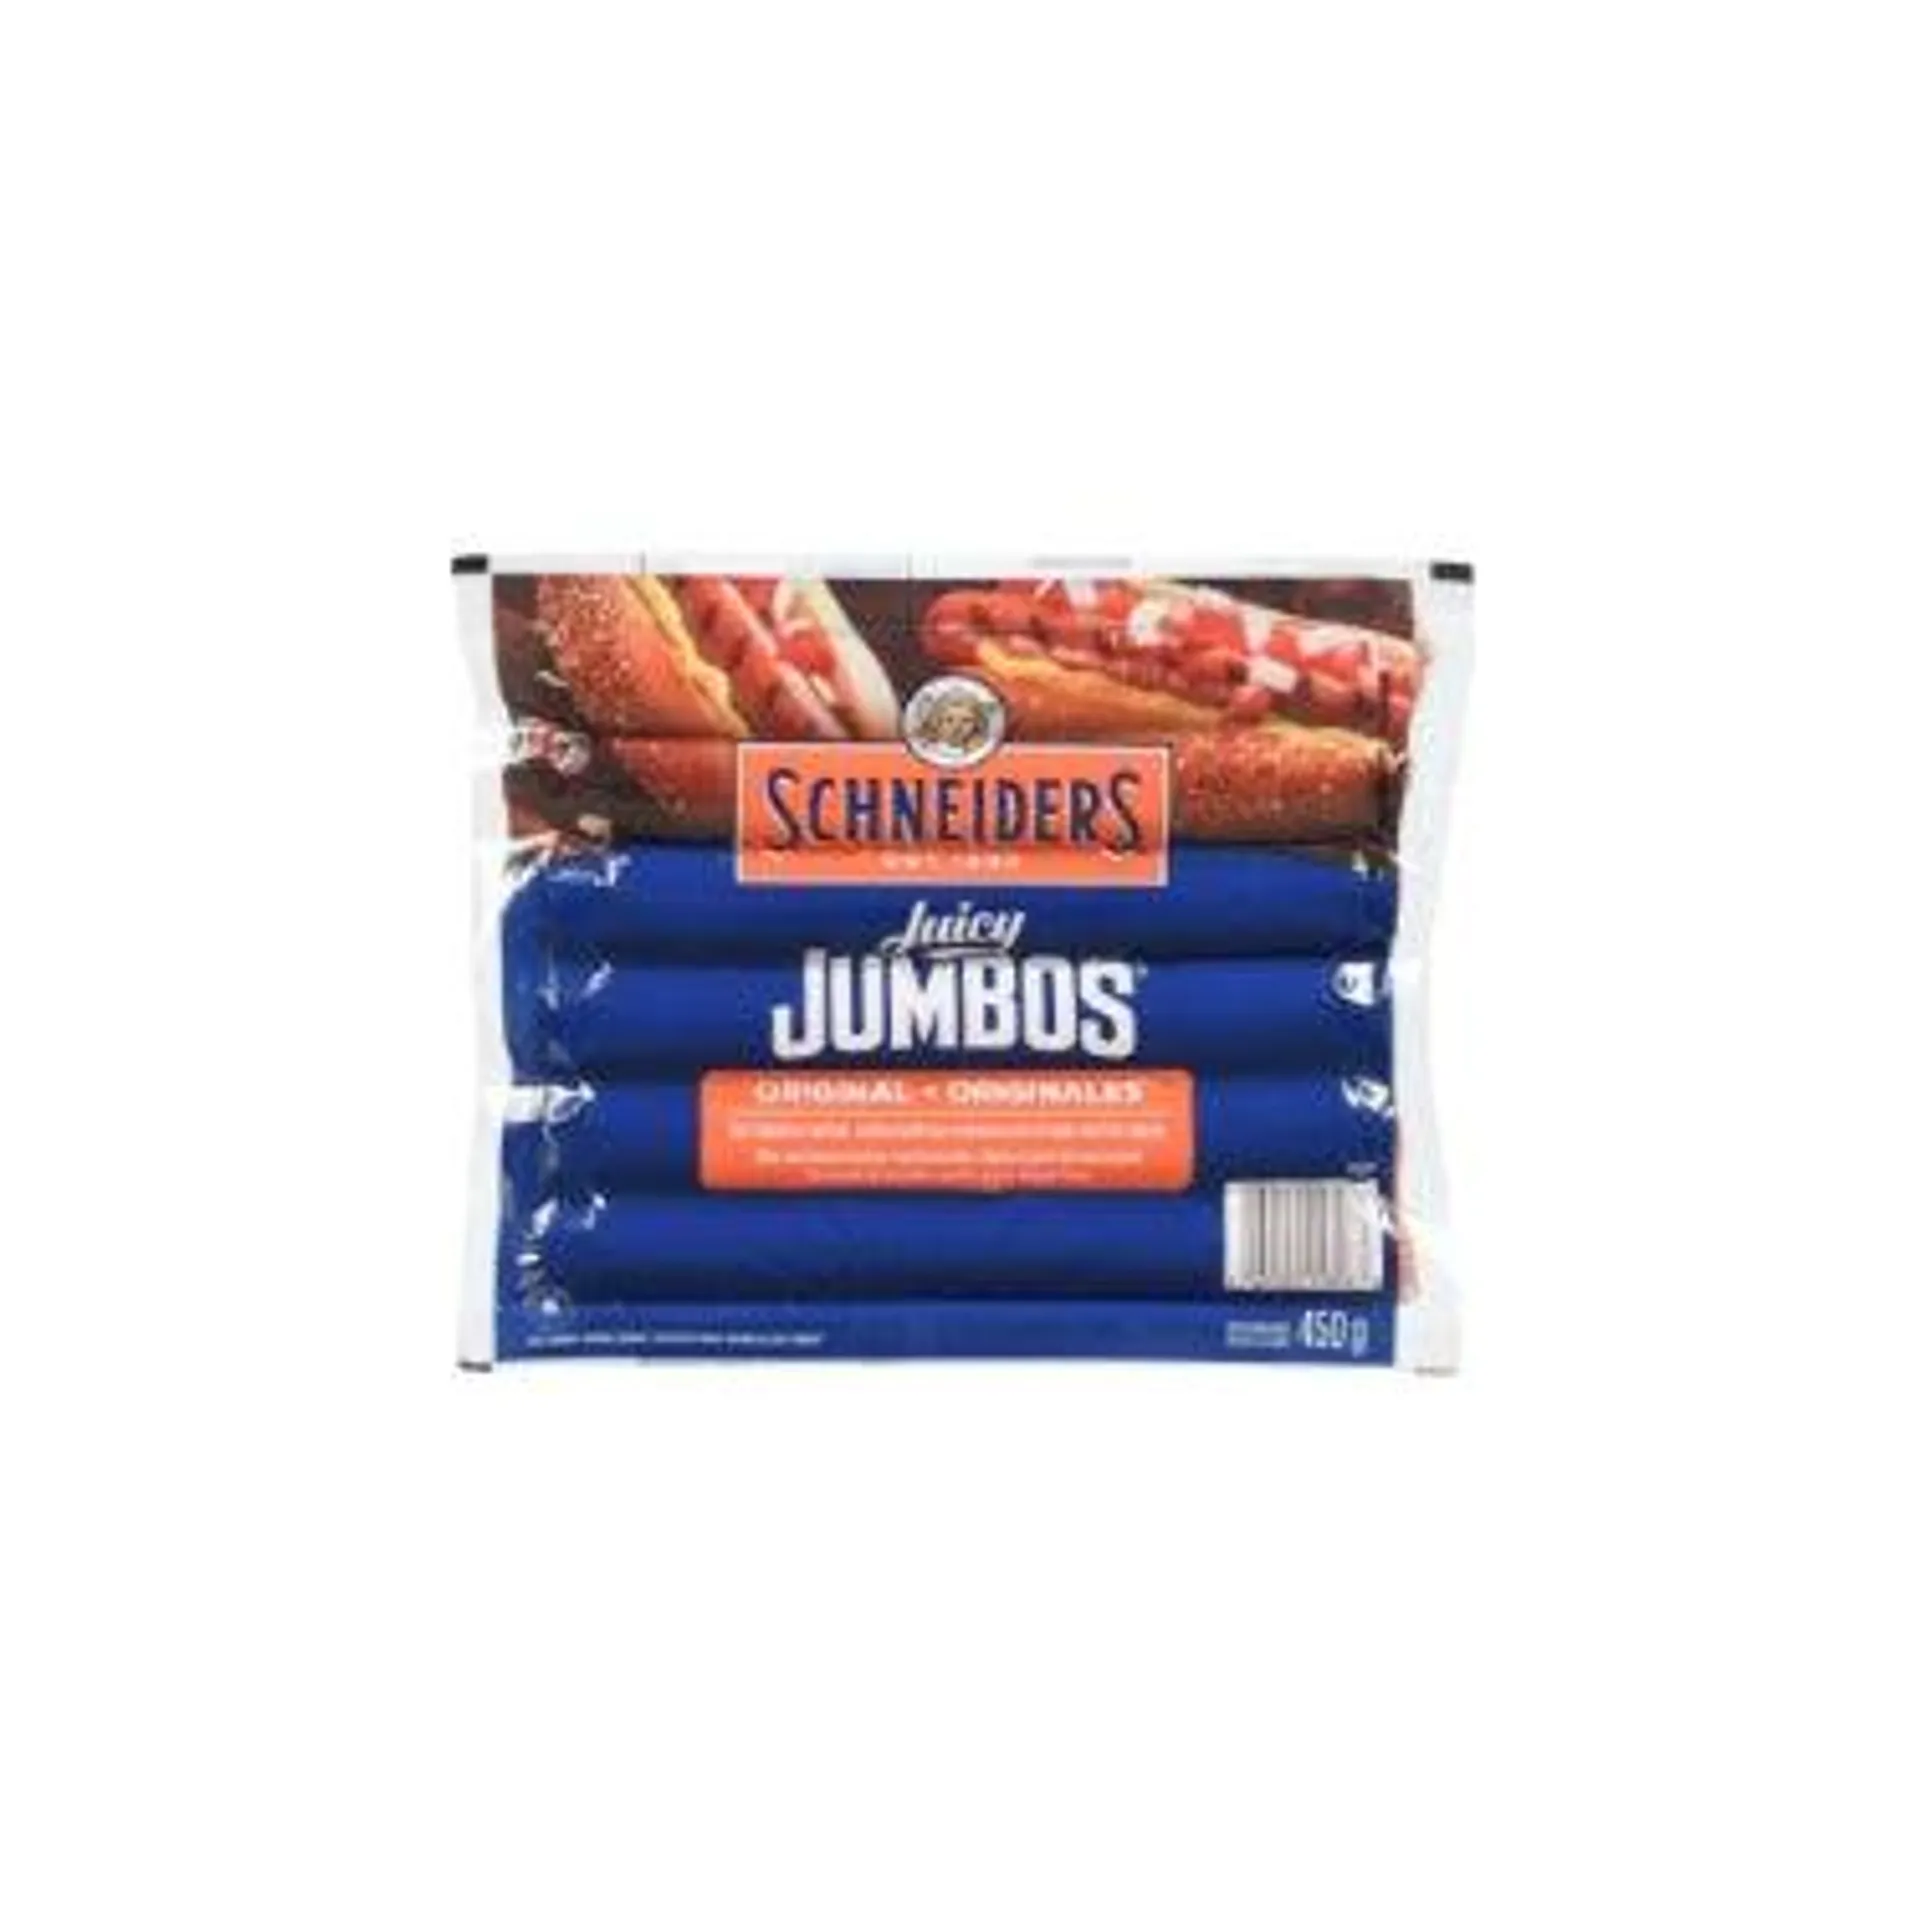 SCHNEIDERS Juicy Jumbos Sausage Original Flavor 450g